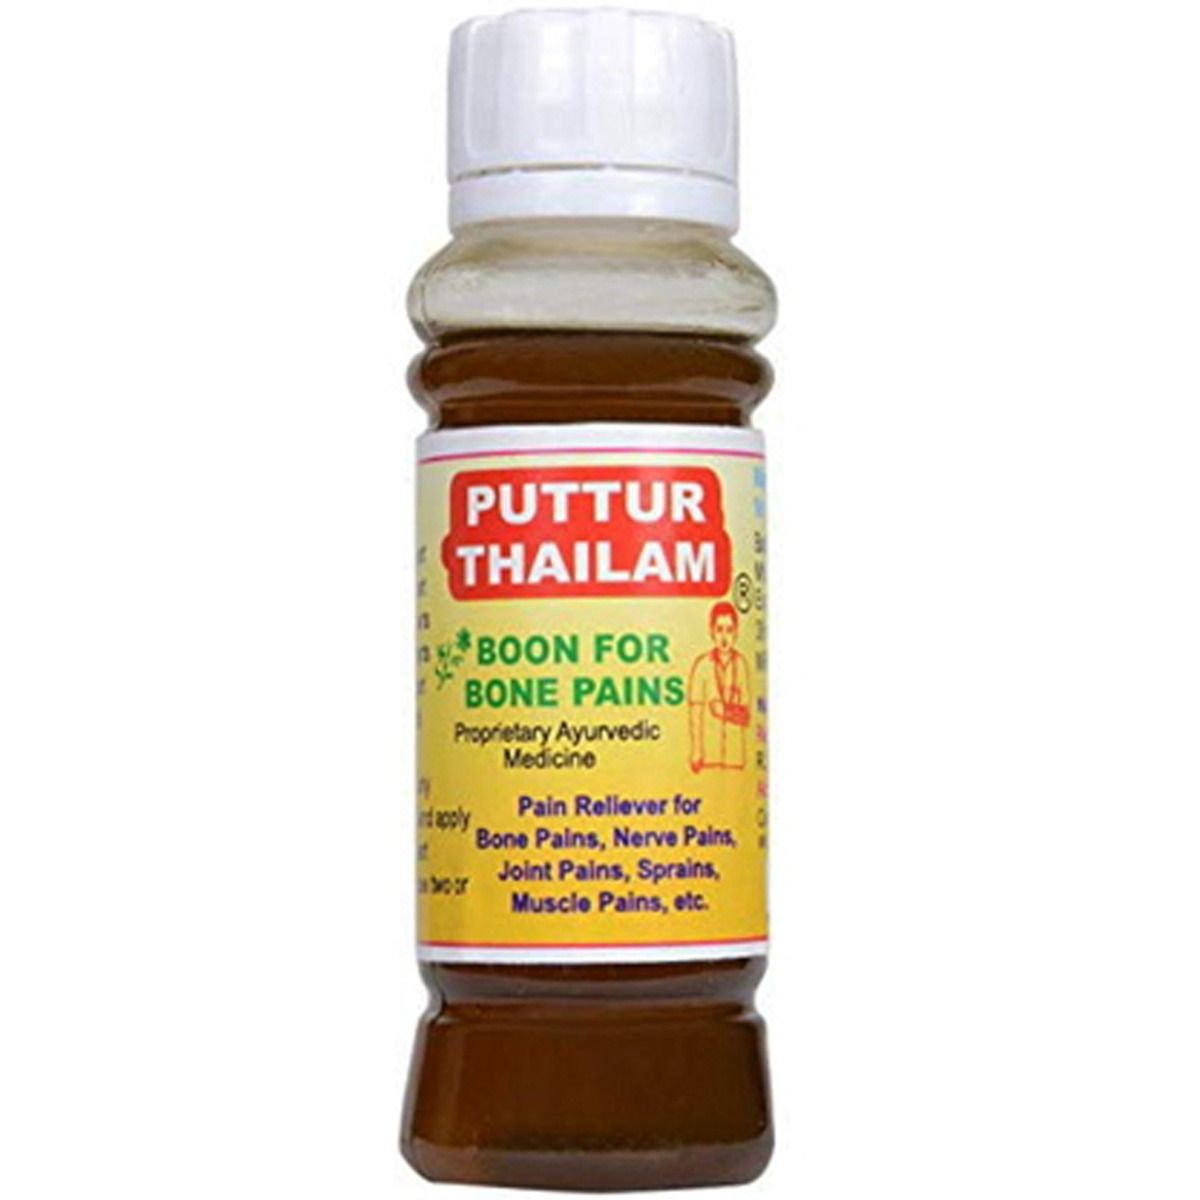 Buy Puttur Thailam Pain Balm, 50 gm Online